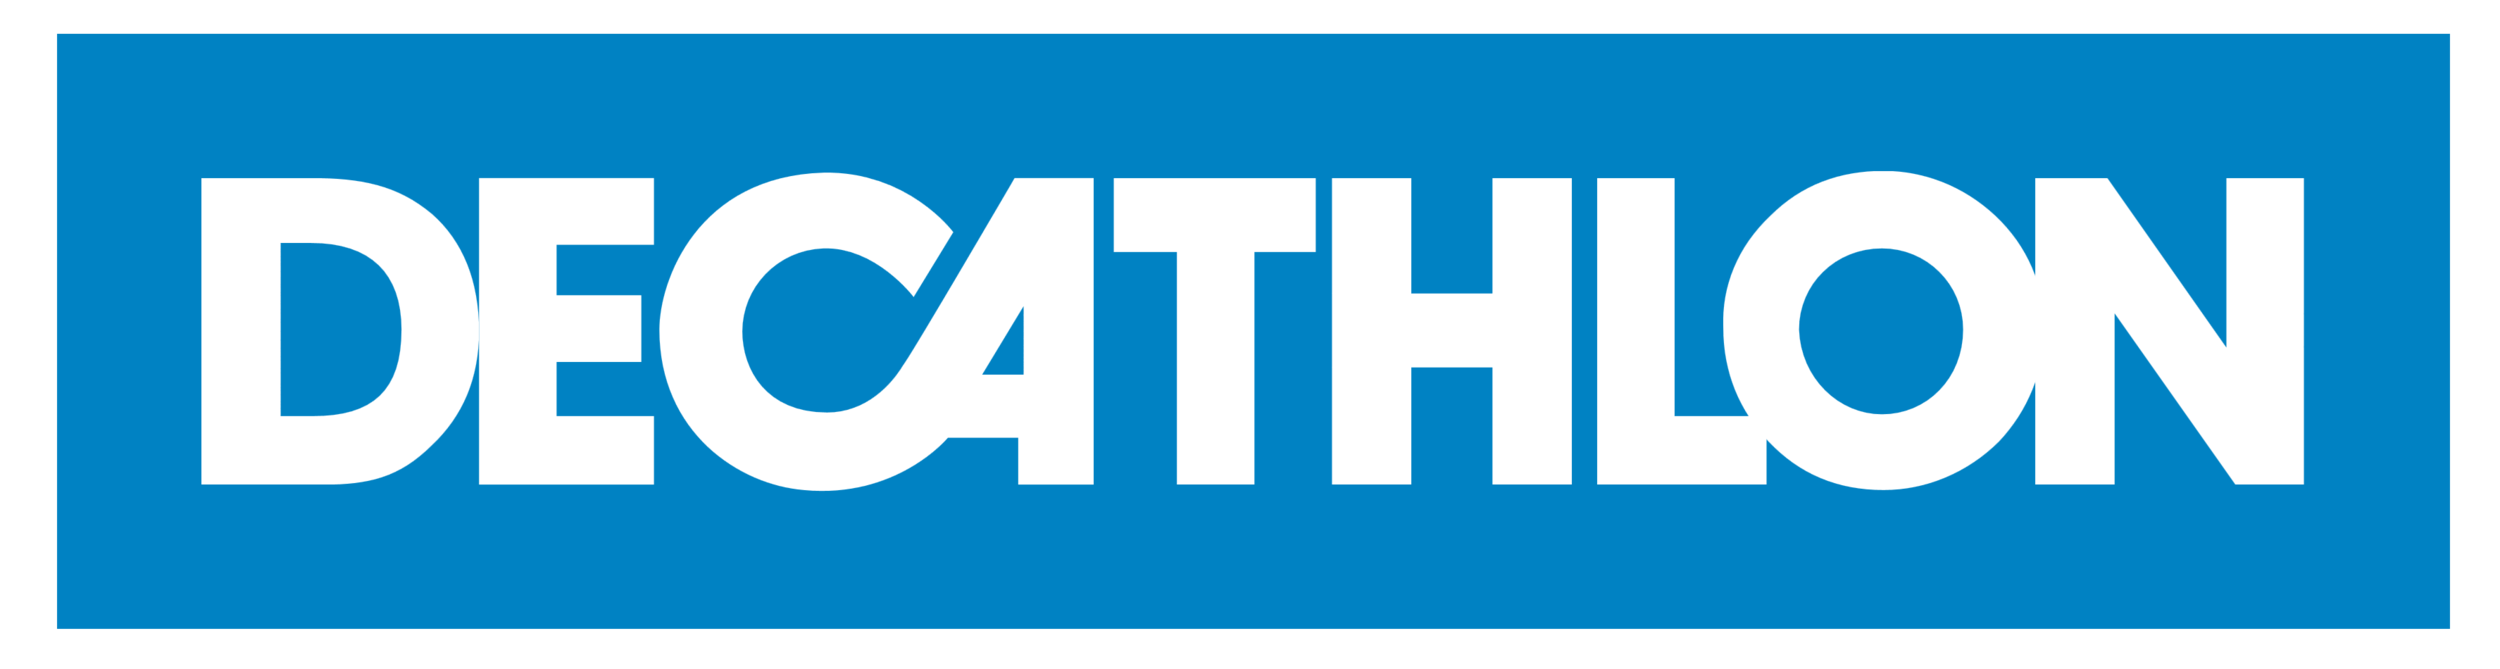 Decathlon_logo.png